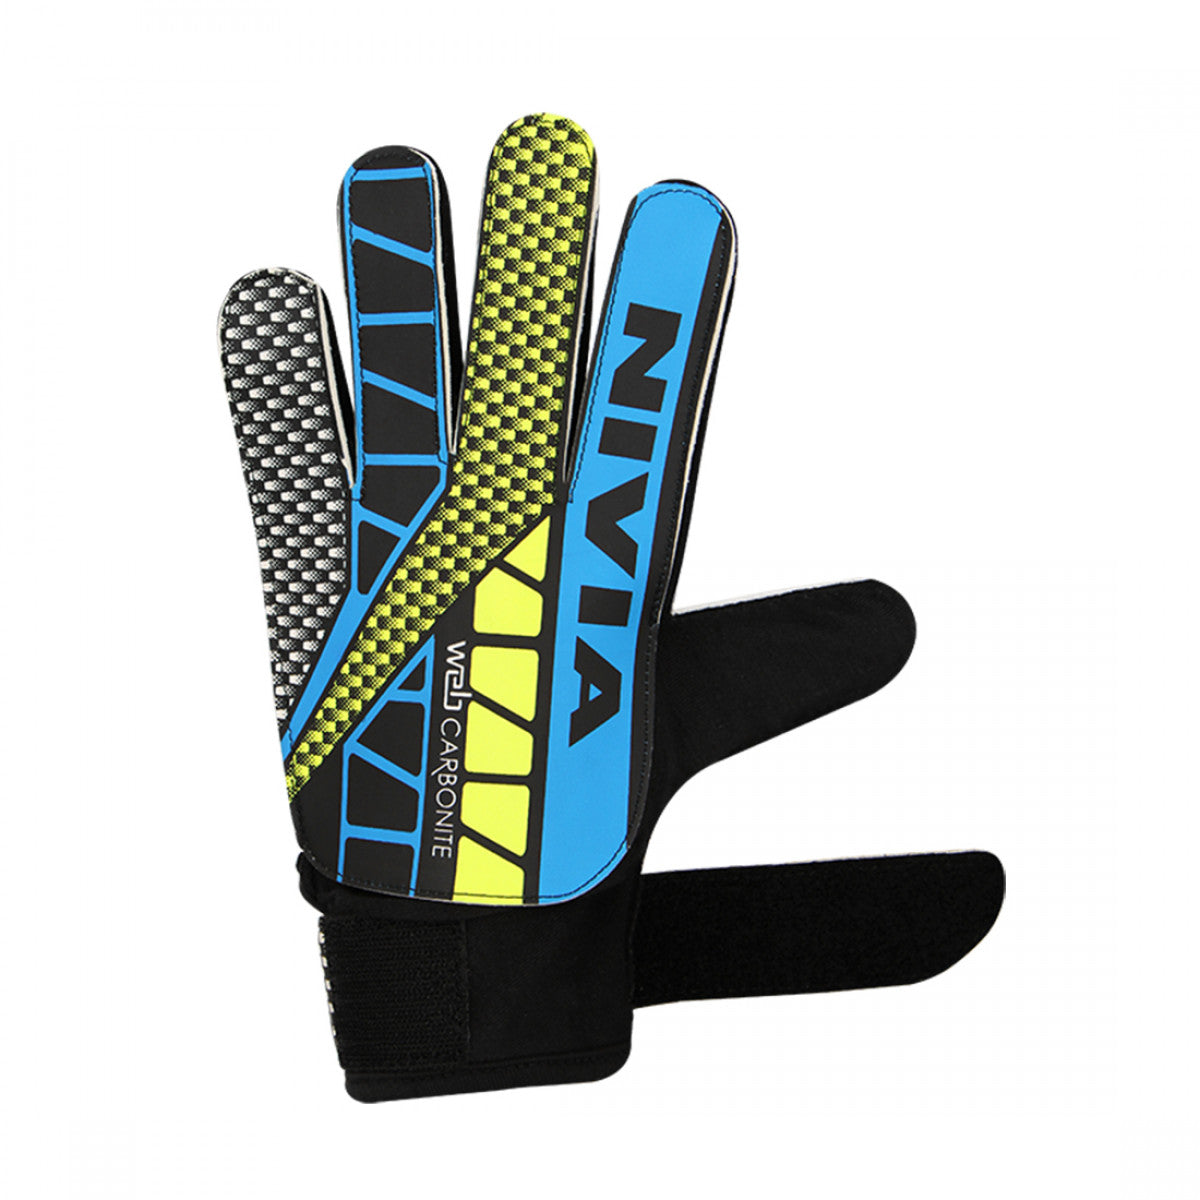 NIVIA Carbonite Web Football Goalkeeper Gloves Multicolor